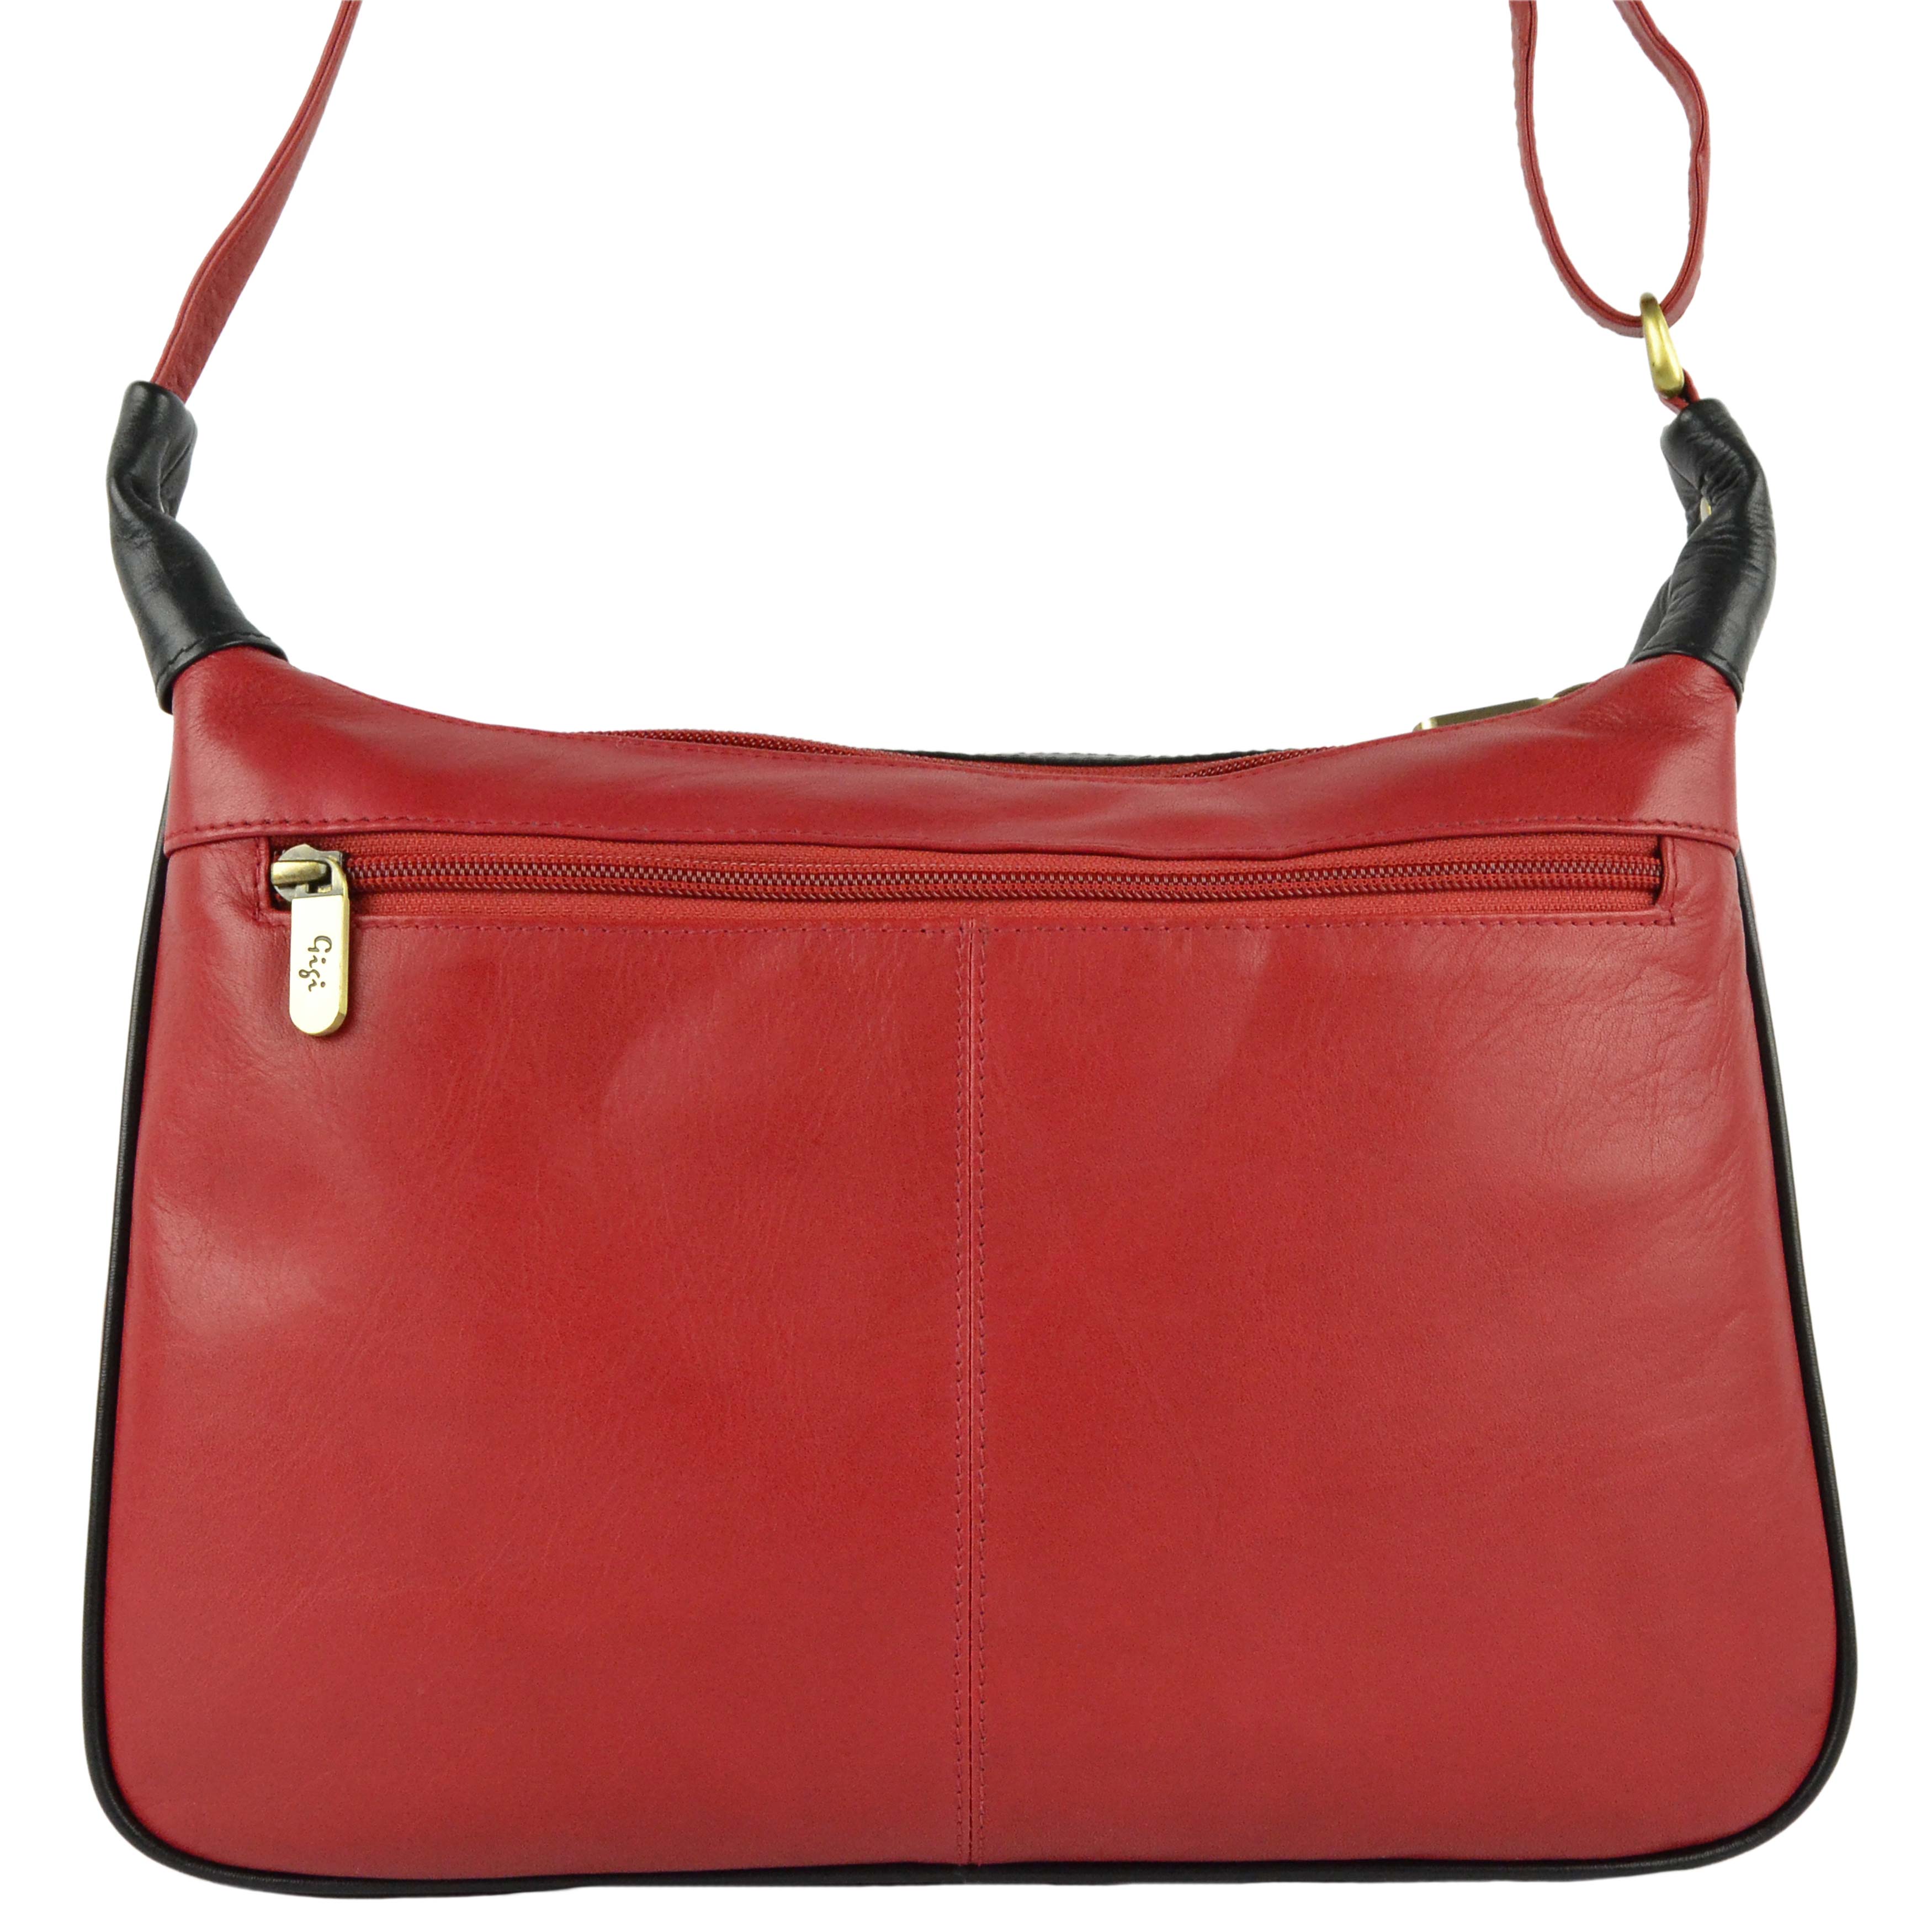 Gigi - Women's Large Leather Tote Handbag - Shoulder Bag/Cross Body with Extra Detachable Adjustable Strap - Othello 6490